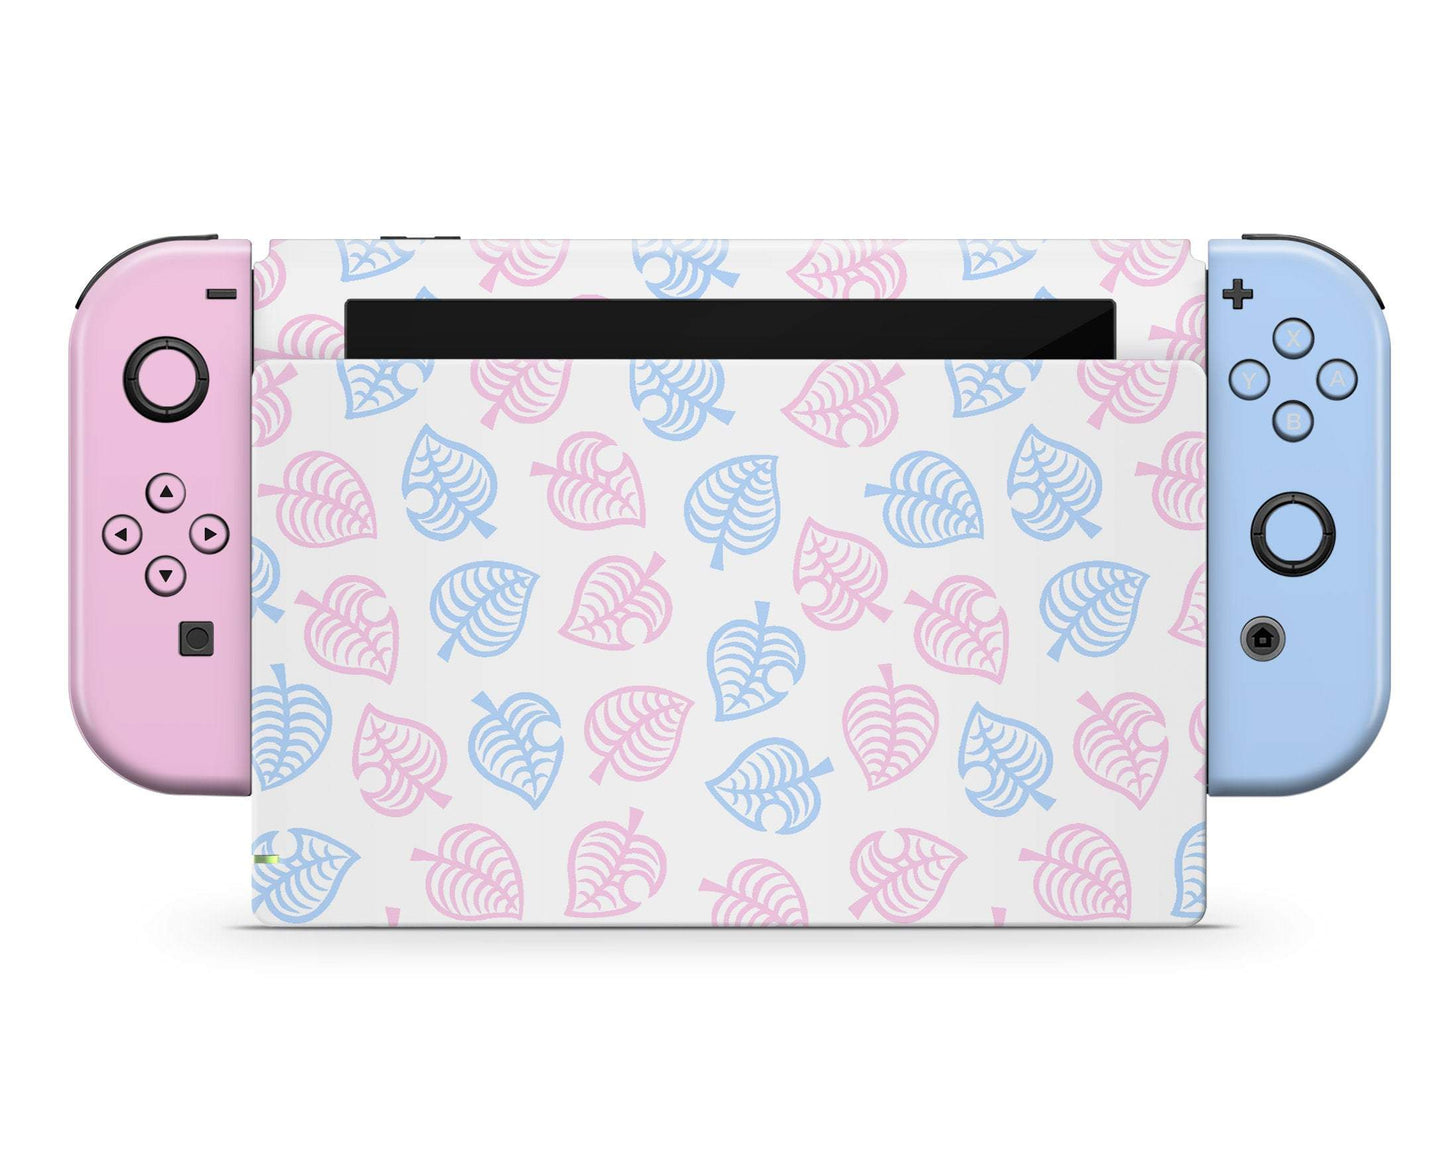 Lux Skins Nintendo Switch Animal Crossing Pastel Pink Blue Leaf Full Set Skins - Pop culture Animal Crossing Skin